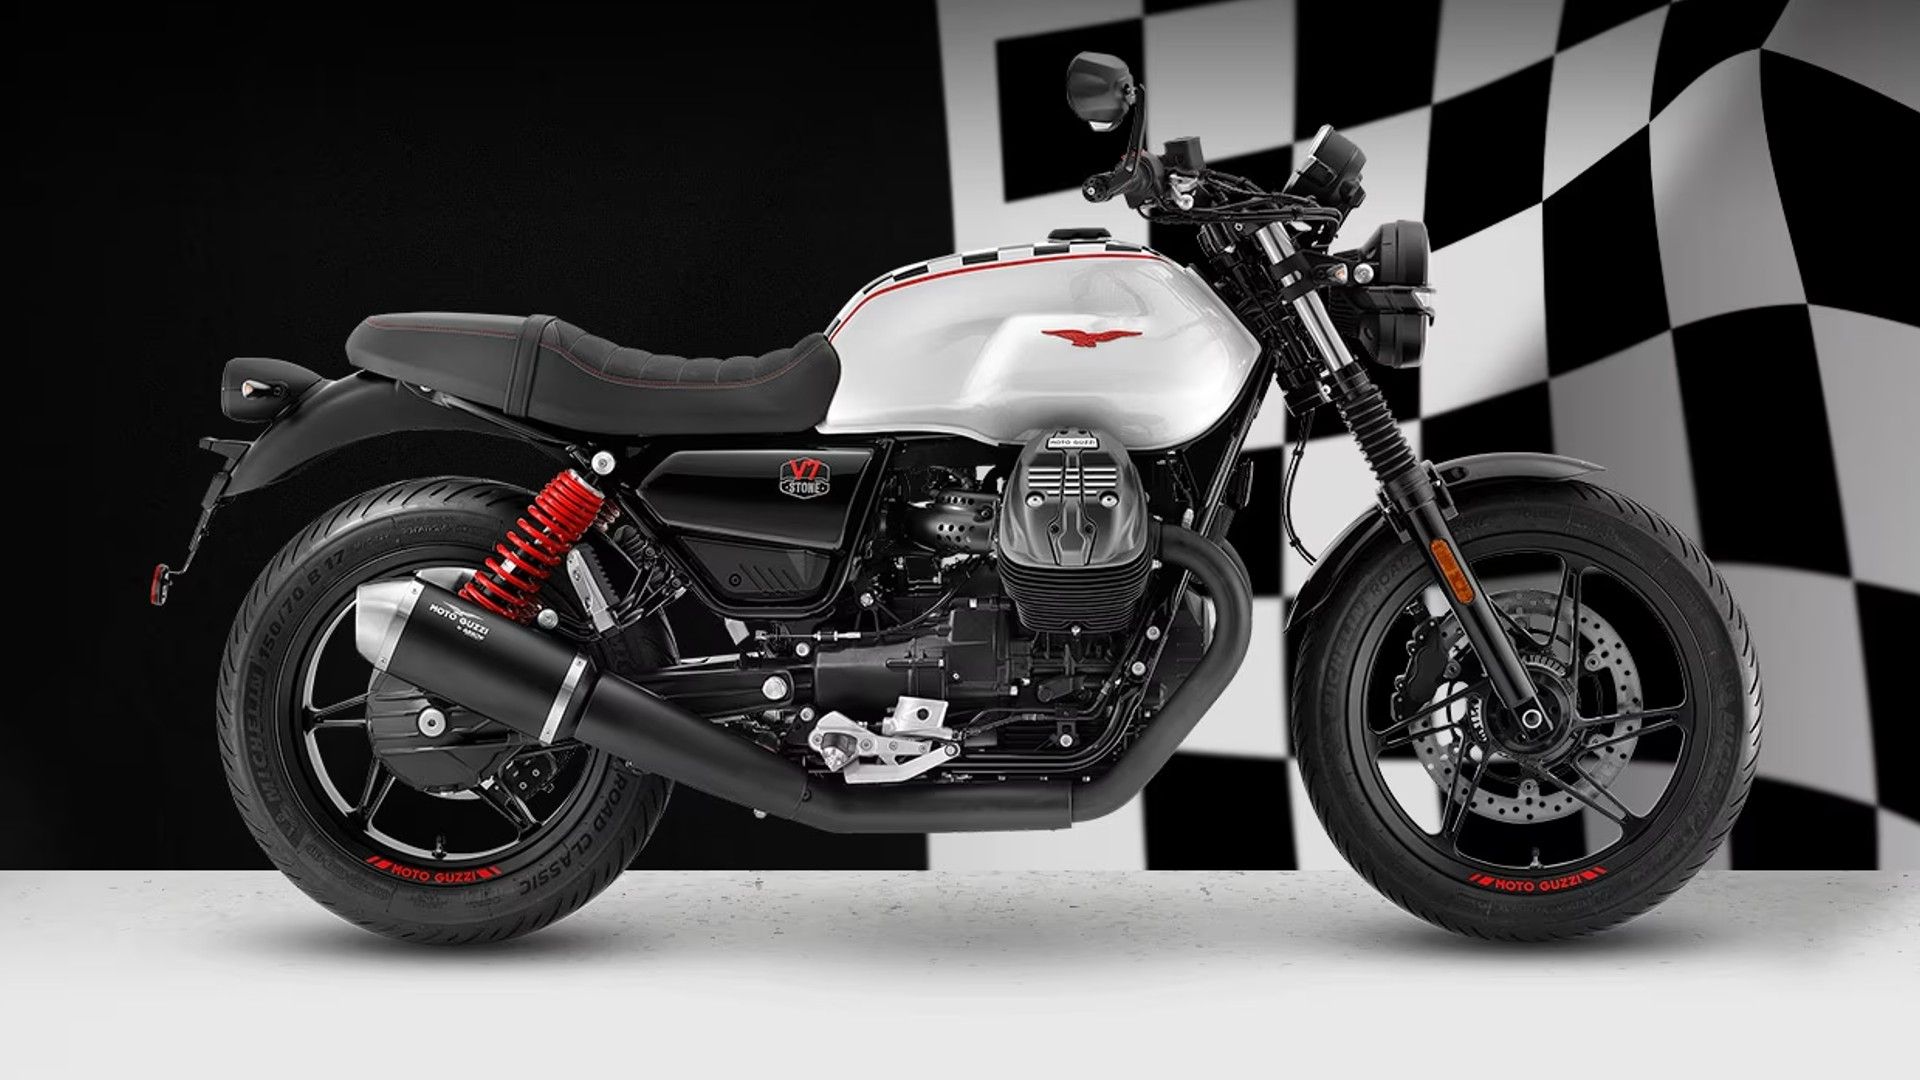 Moto Guzzi Launches Most Powerful Version of V7 Street Bike Yet - Maxim